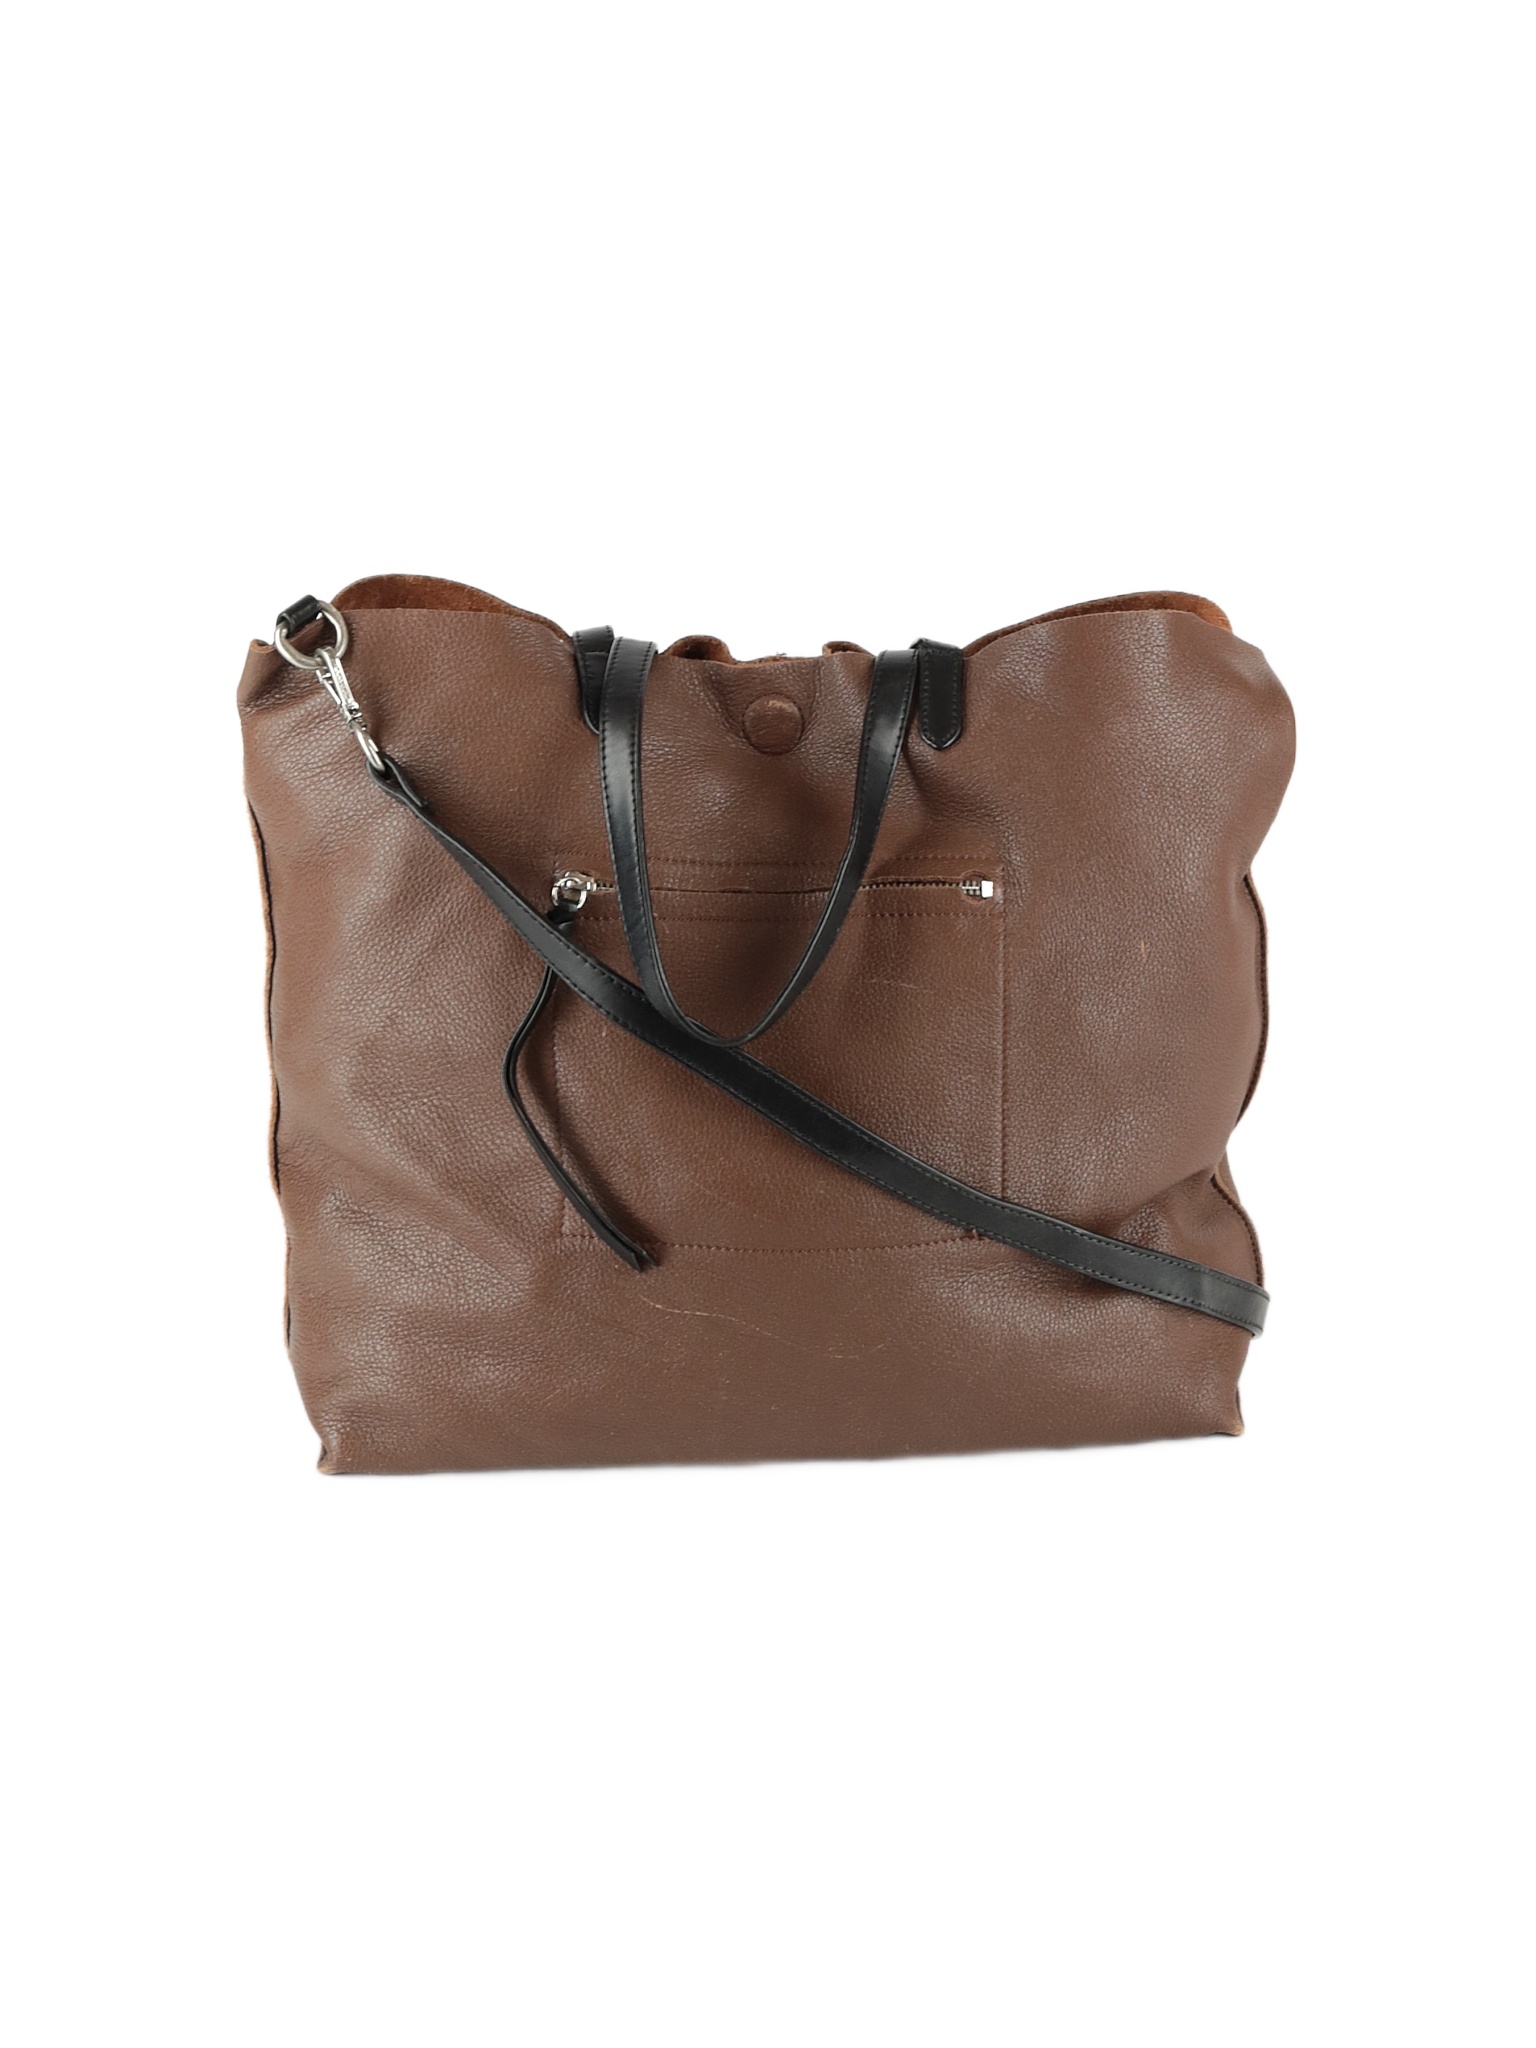 Linea Pelle Flap Closure Handbags